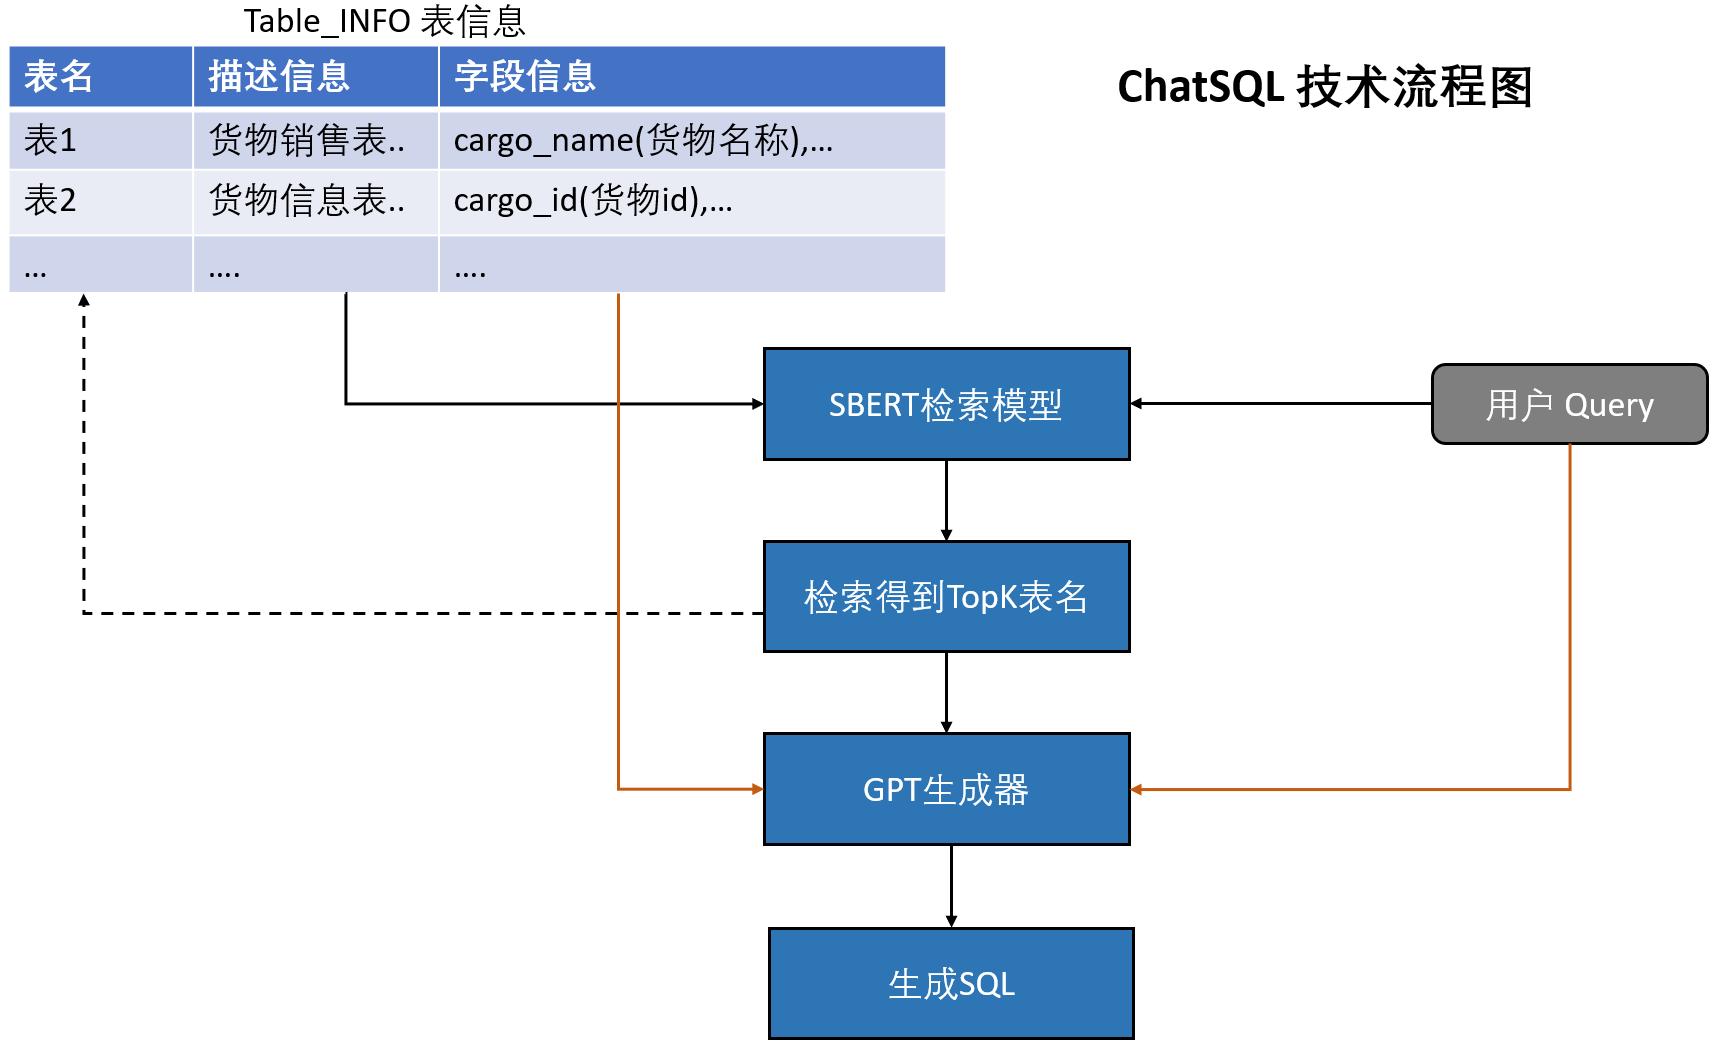 ChatSQL技术流程图.png